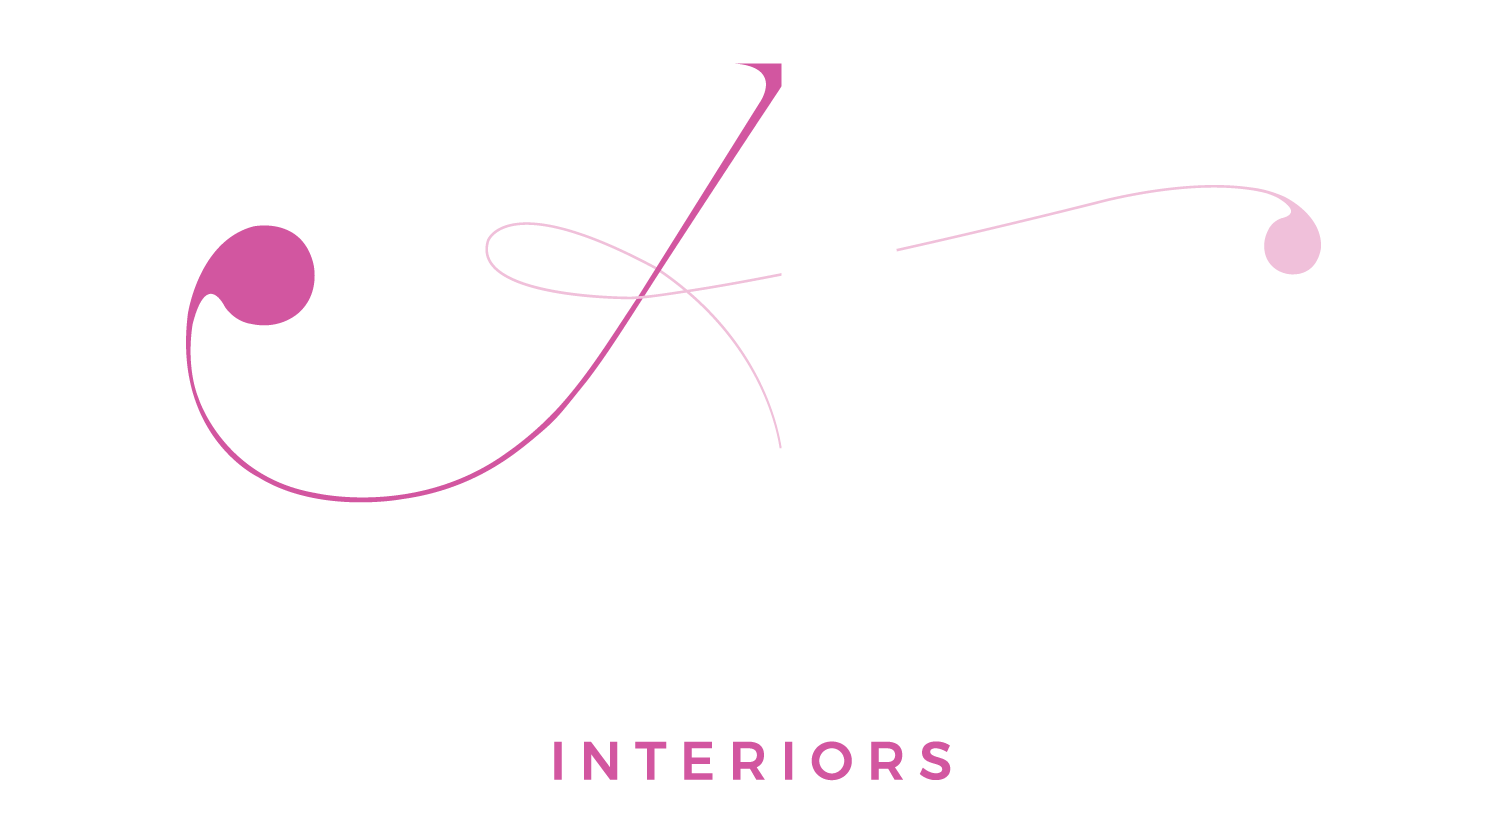 Andrea Brooks Interiors